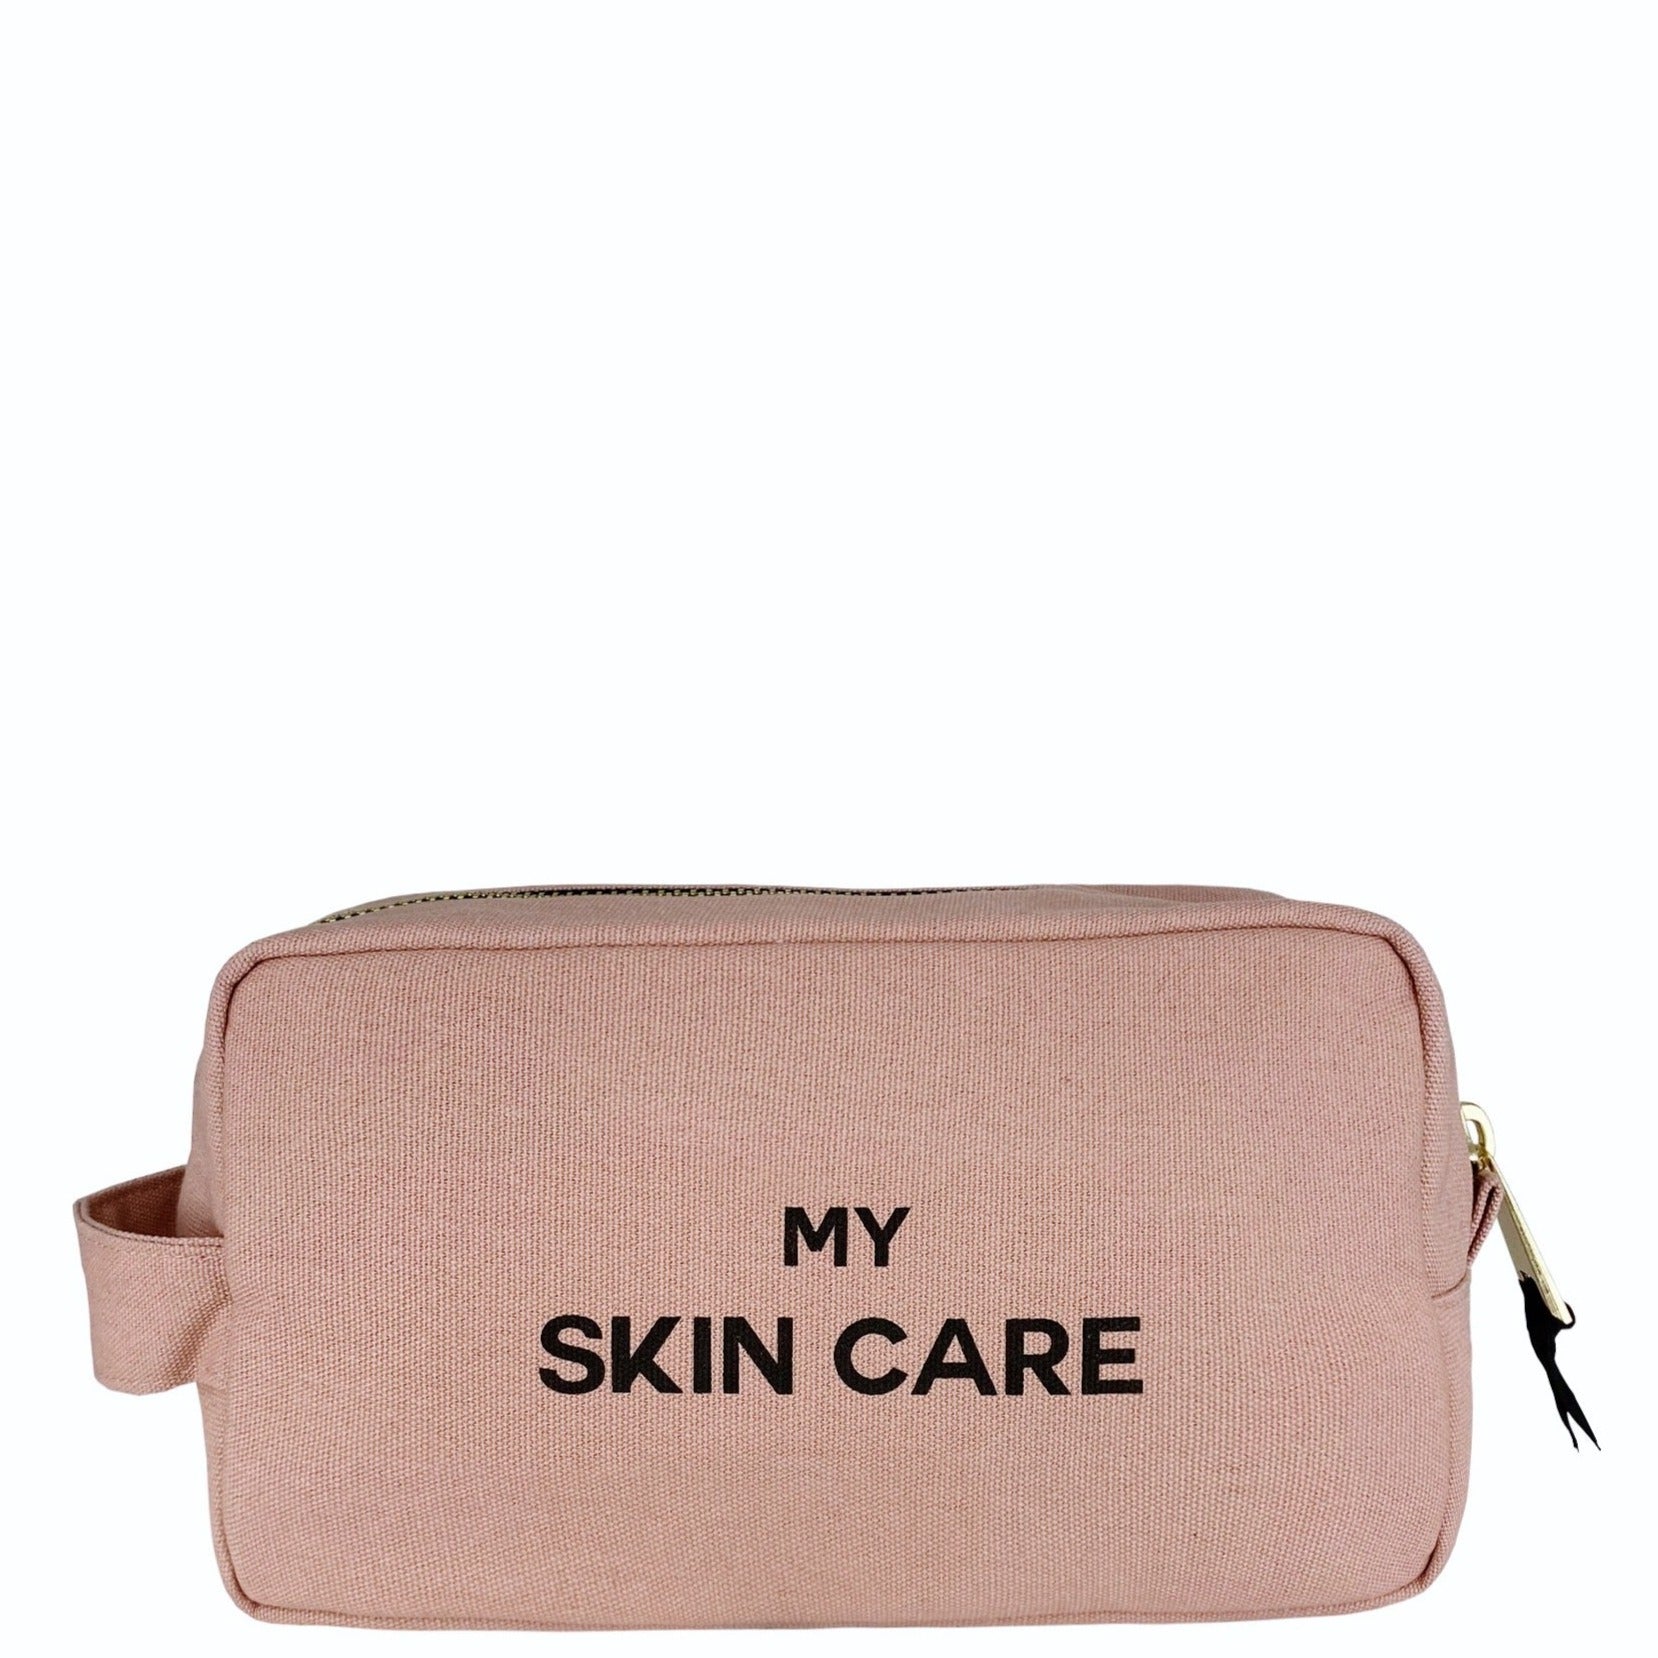 My skin care, pochette de soin personnalisable, Rose poudré - Bag-all France